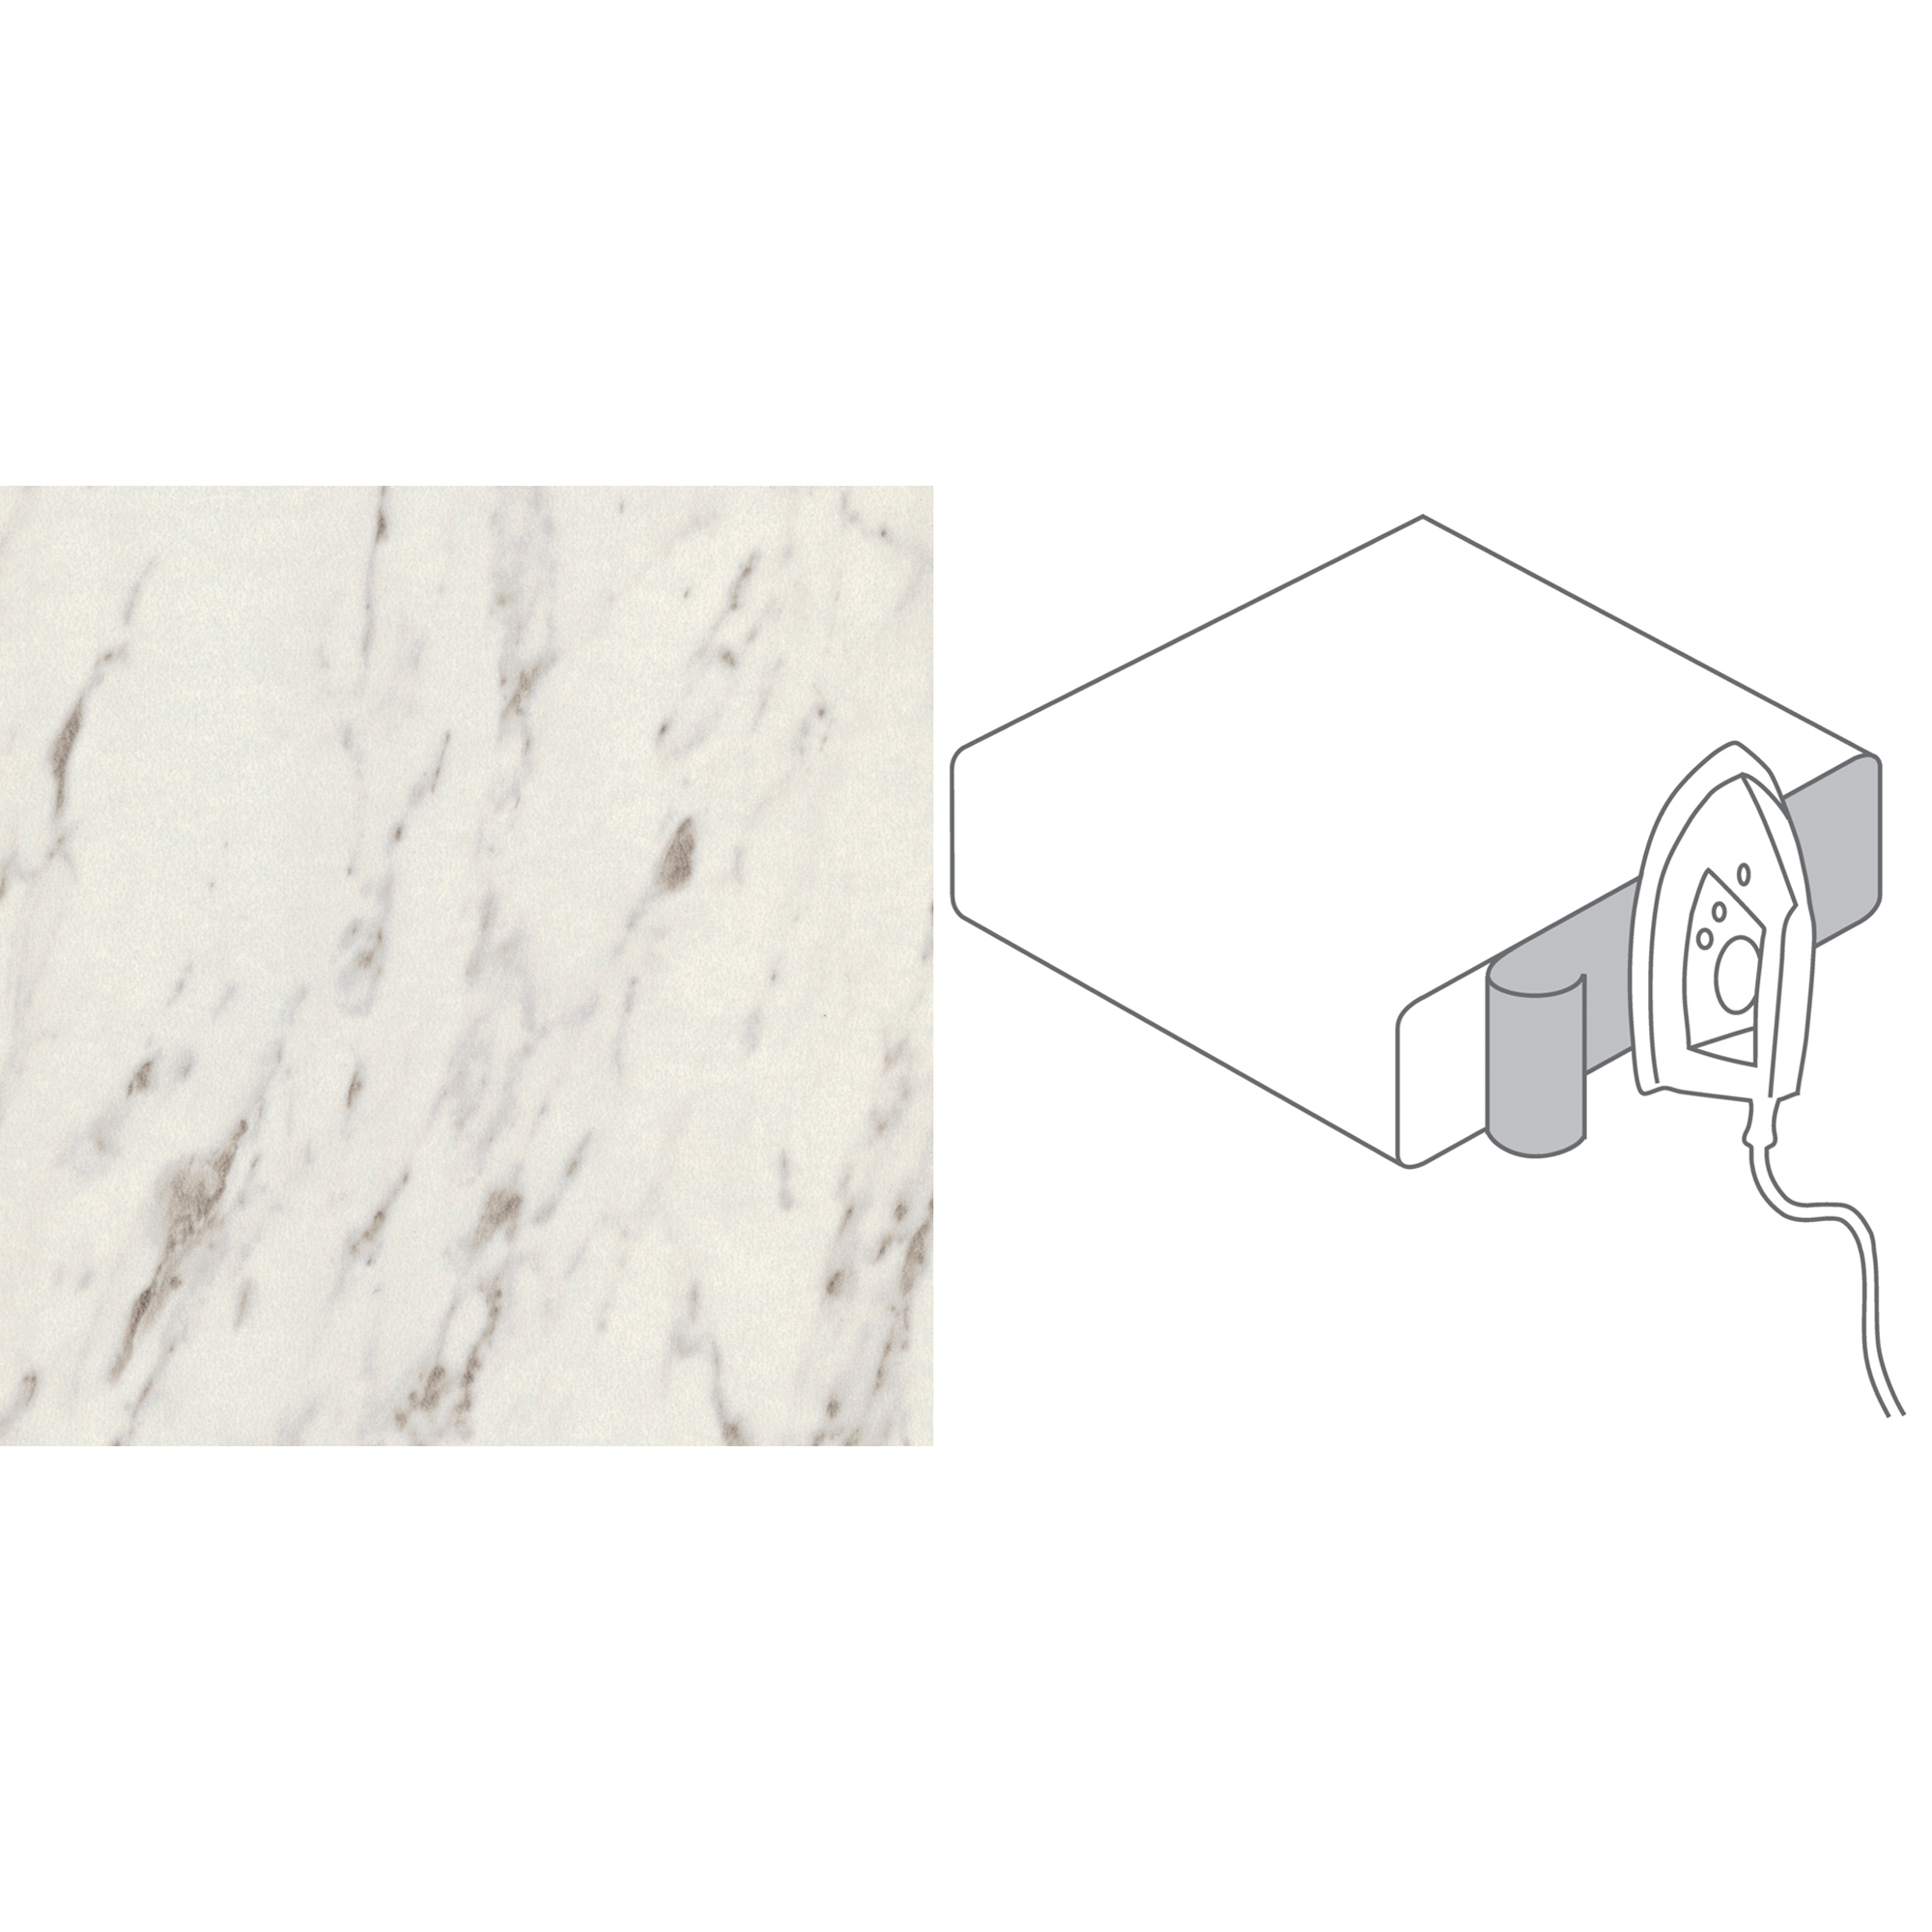 Kantenumleimer "Carrara royal" weiß 65 x 4,4 x 0,3 cm 2 Stück + product picture